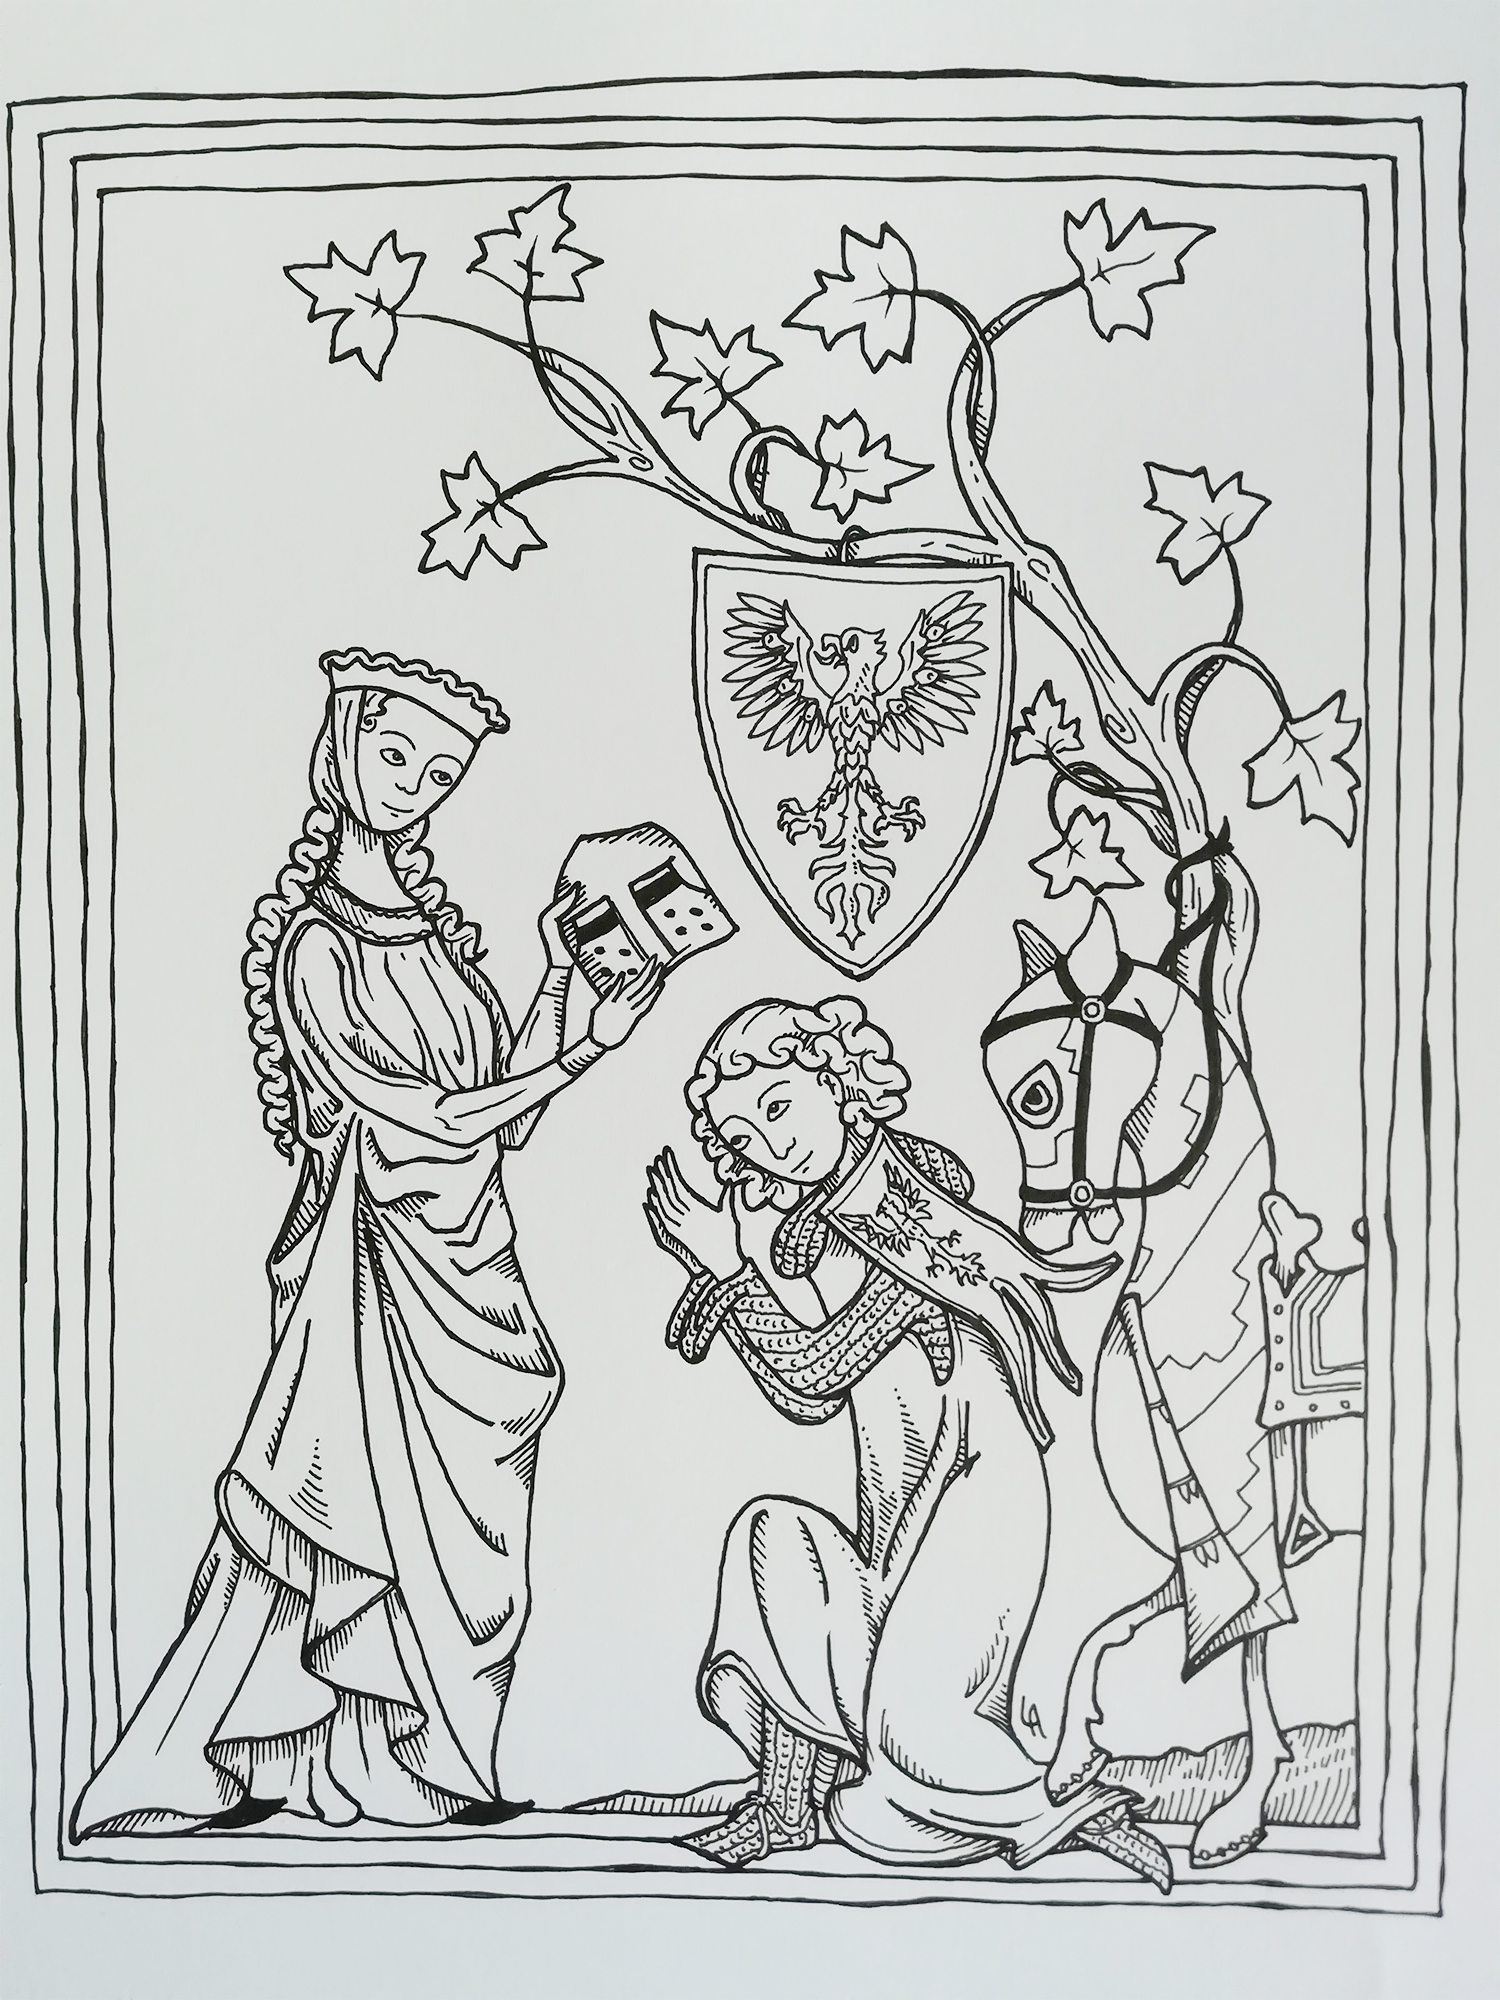 Medieval Illustration by Antonio Lamanna